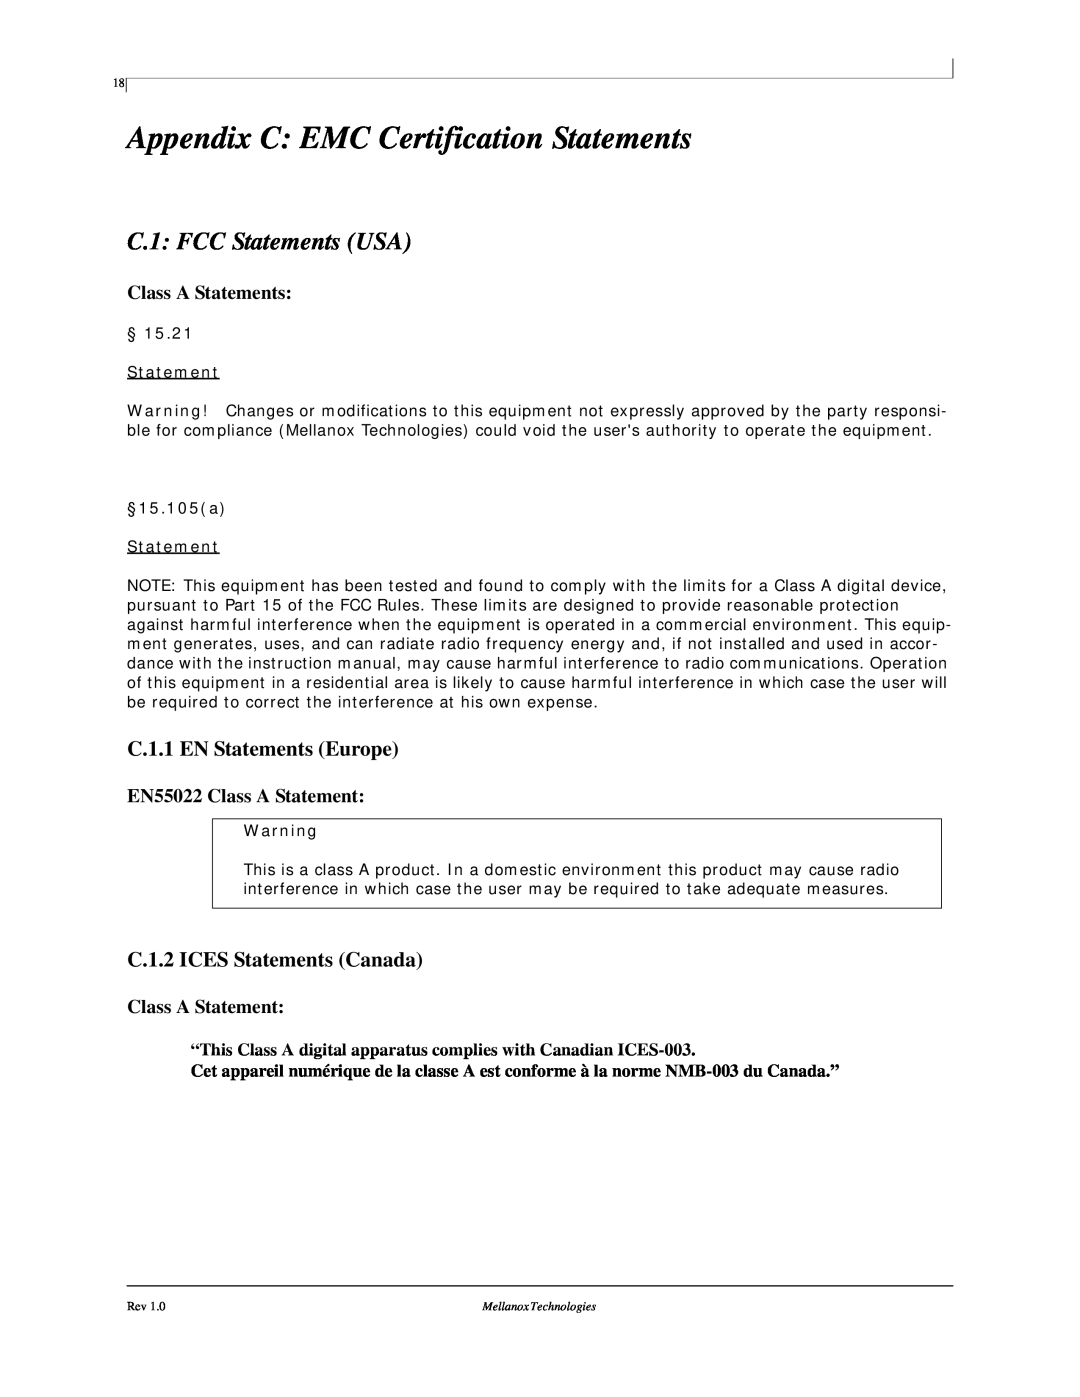 Dell M2401G user manual Appendix C EMC Certification Statements, C.1.1 EN Statements Europe, C.1.2 ICES Statements Canada 